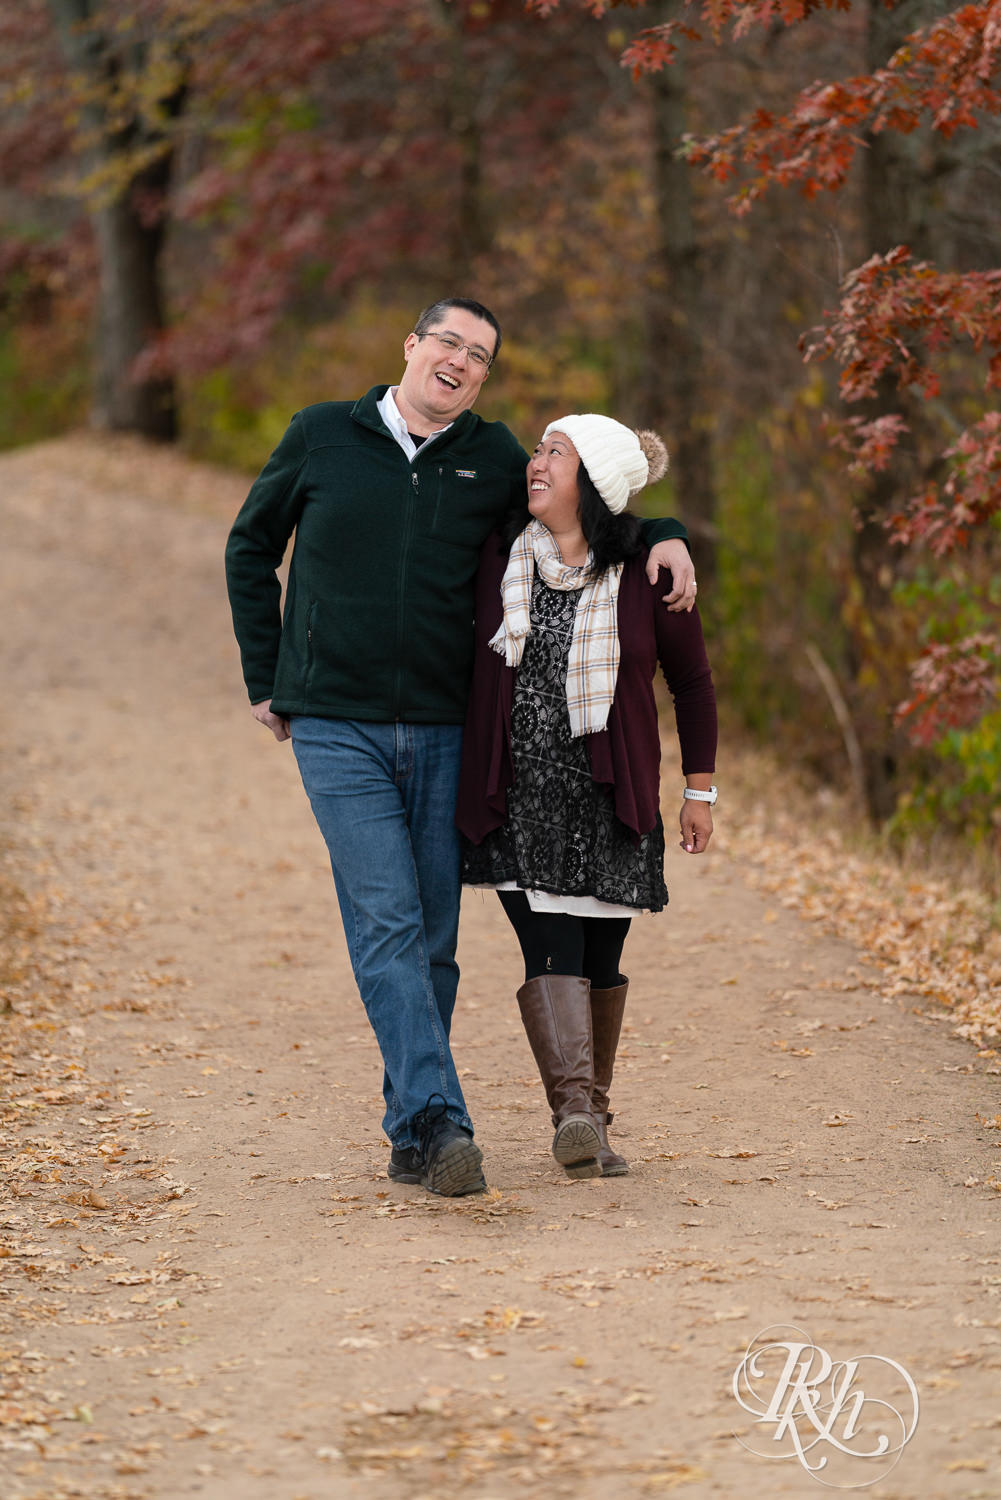 Man and Korean woman walk down trail laughing in fall colors at Lebanon Hills Regional Park in Eagan, Minnesota.